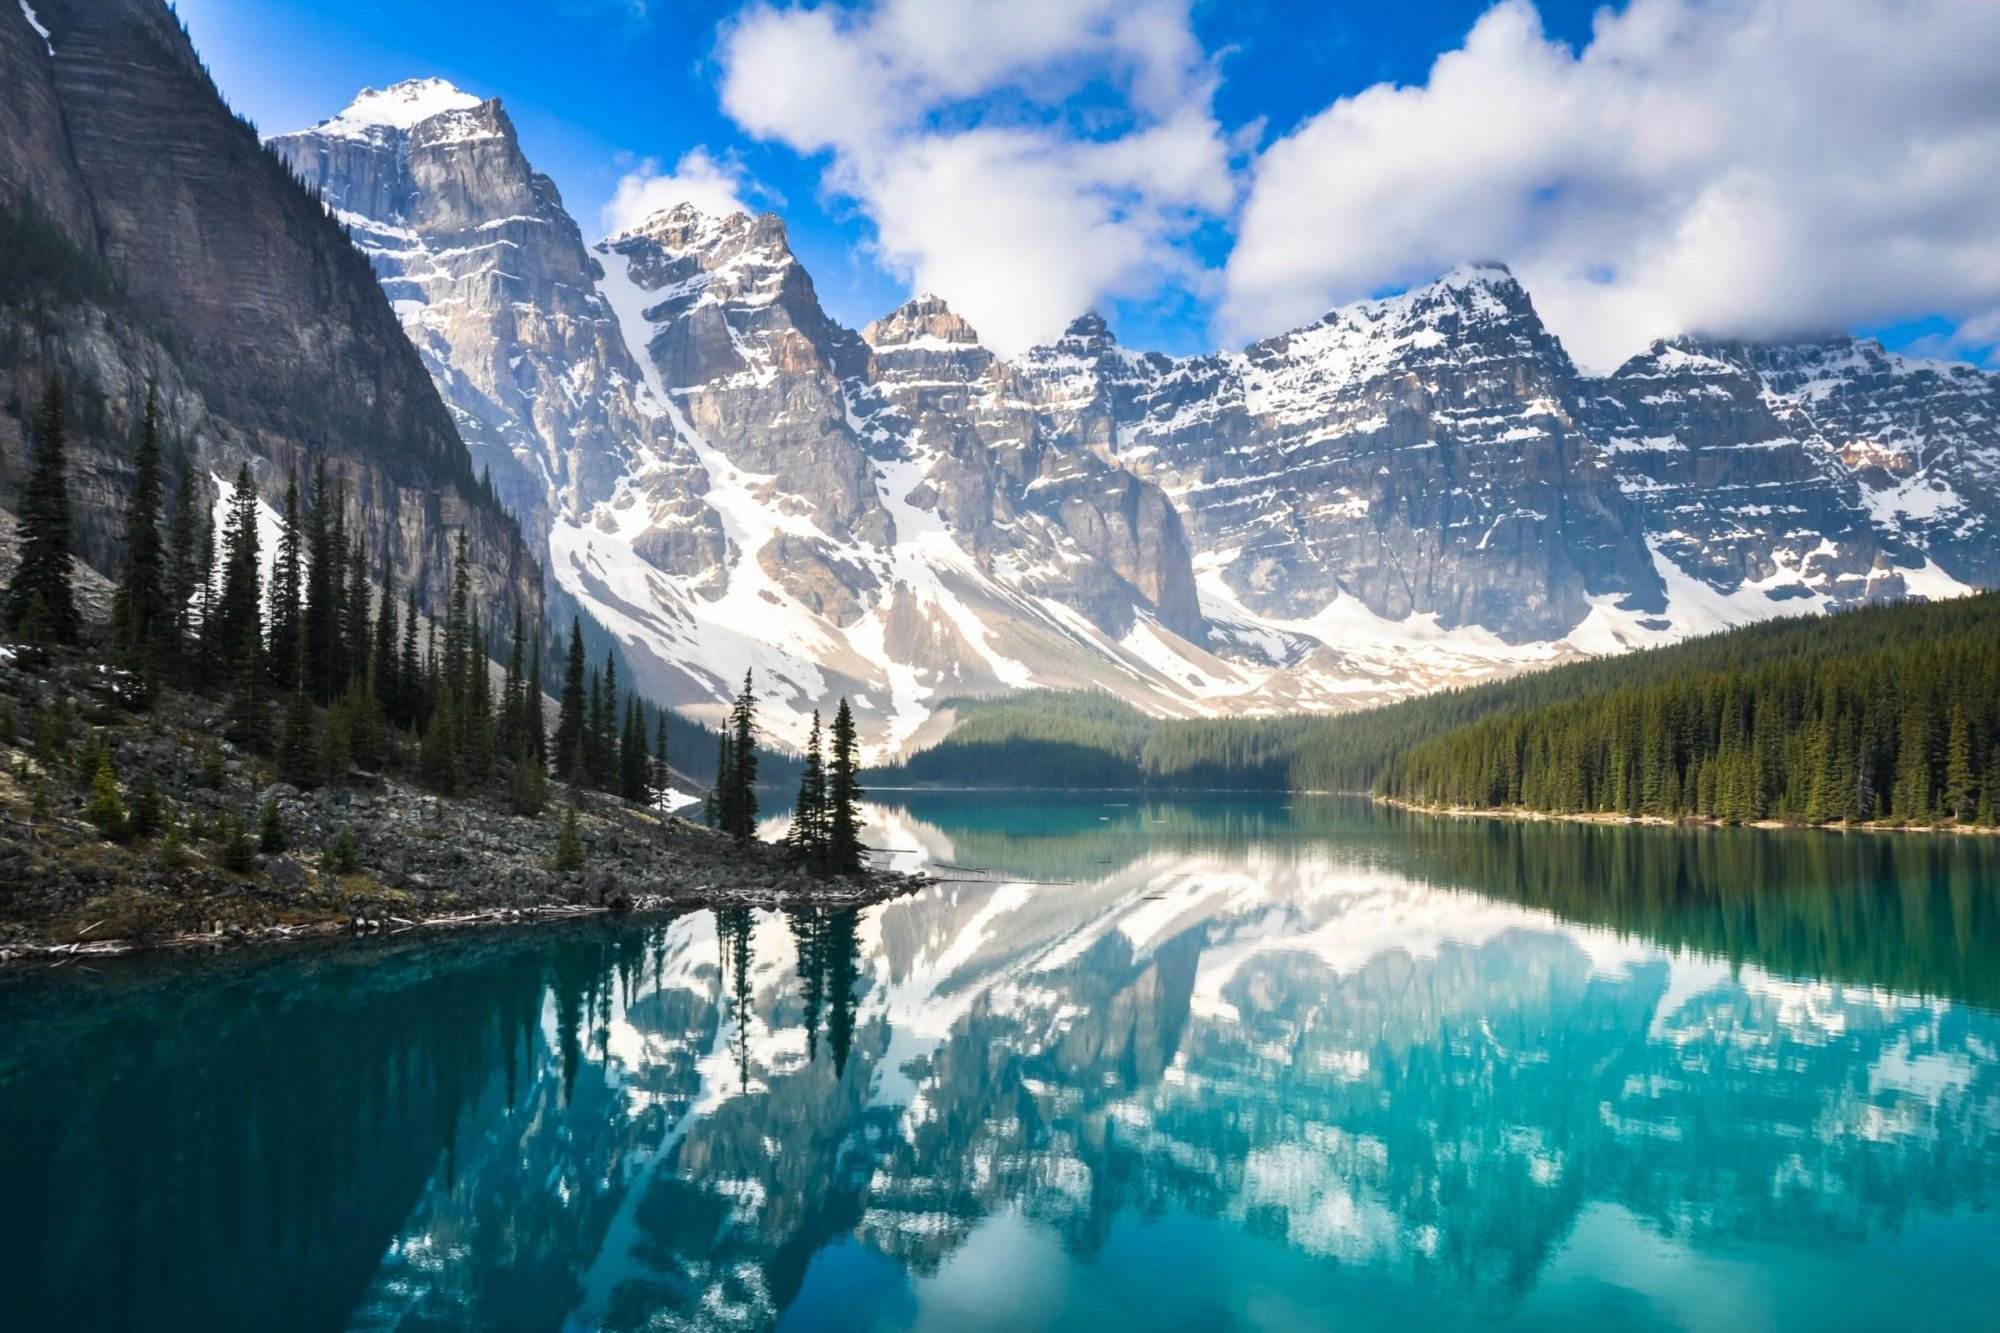 Document Checklist for Canada Visitor / Tourist Visa – 2022 updates